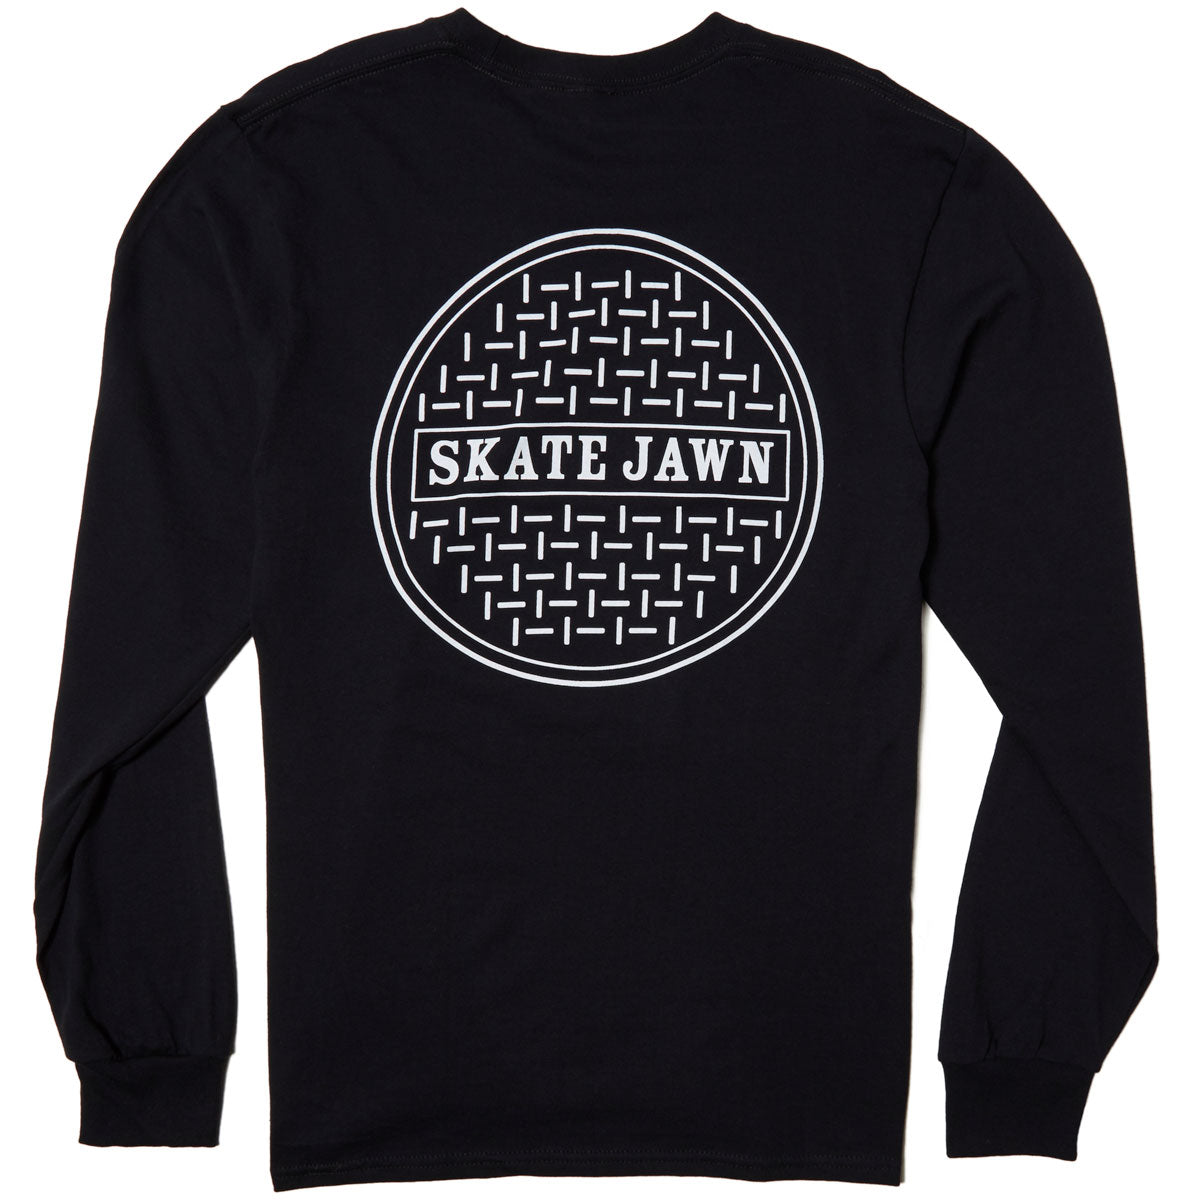 Skate Jawn Sewer Cap Long Sleeve T-Shirt - Black image 1